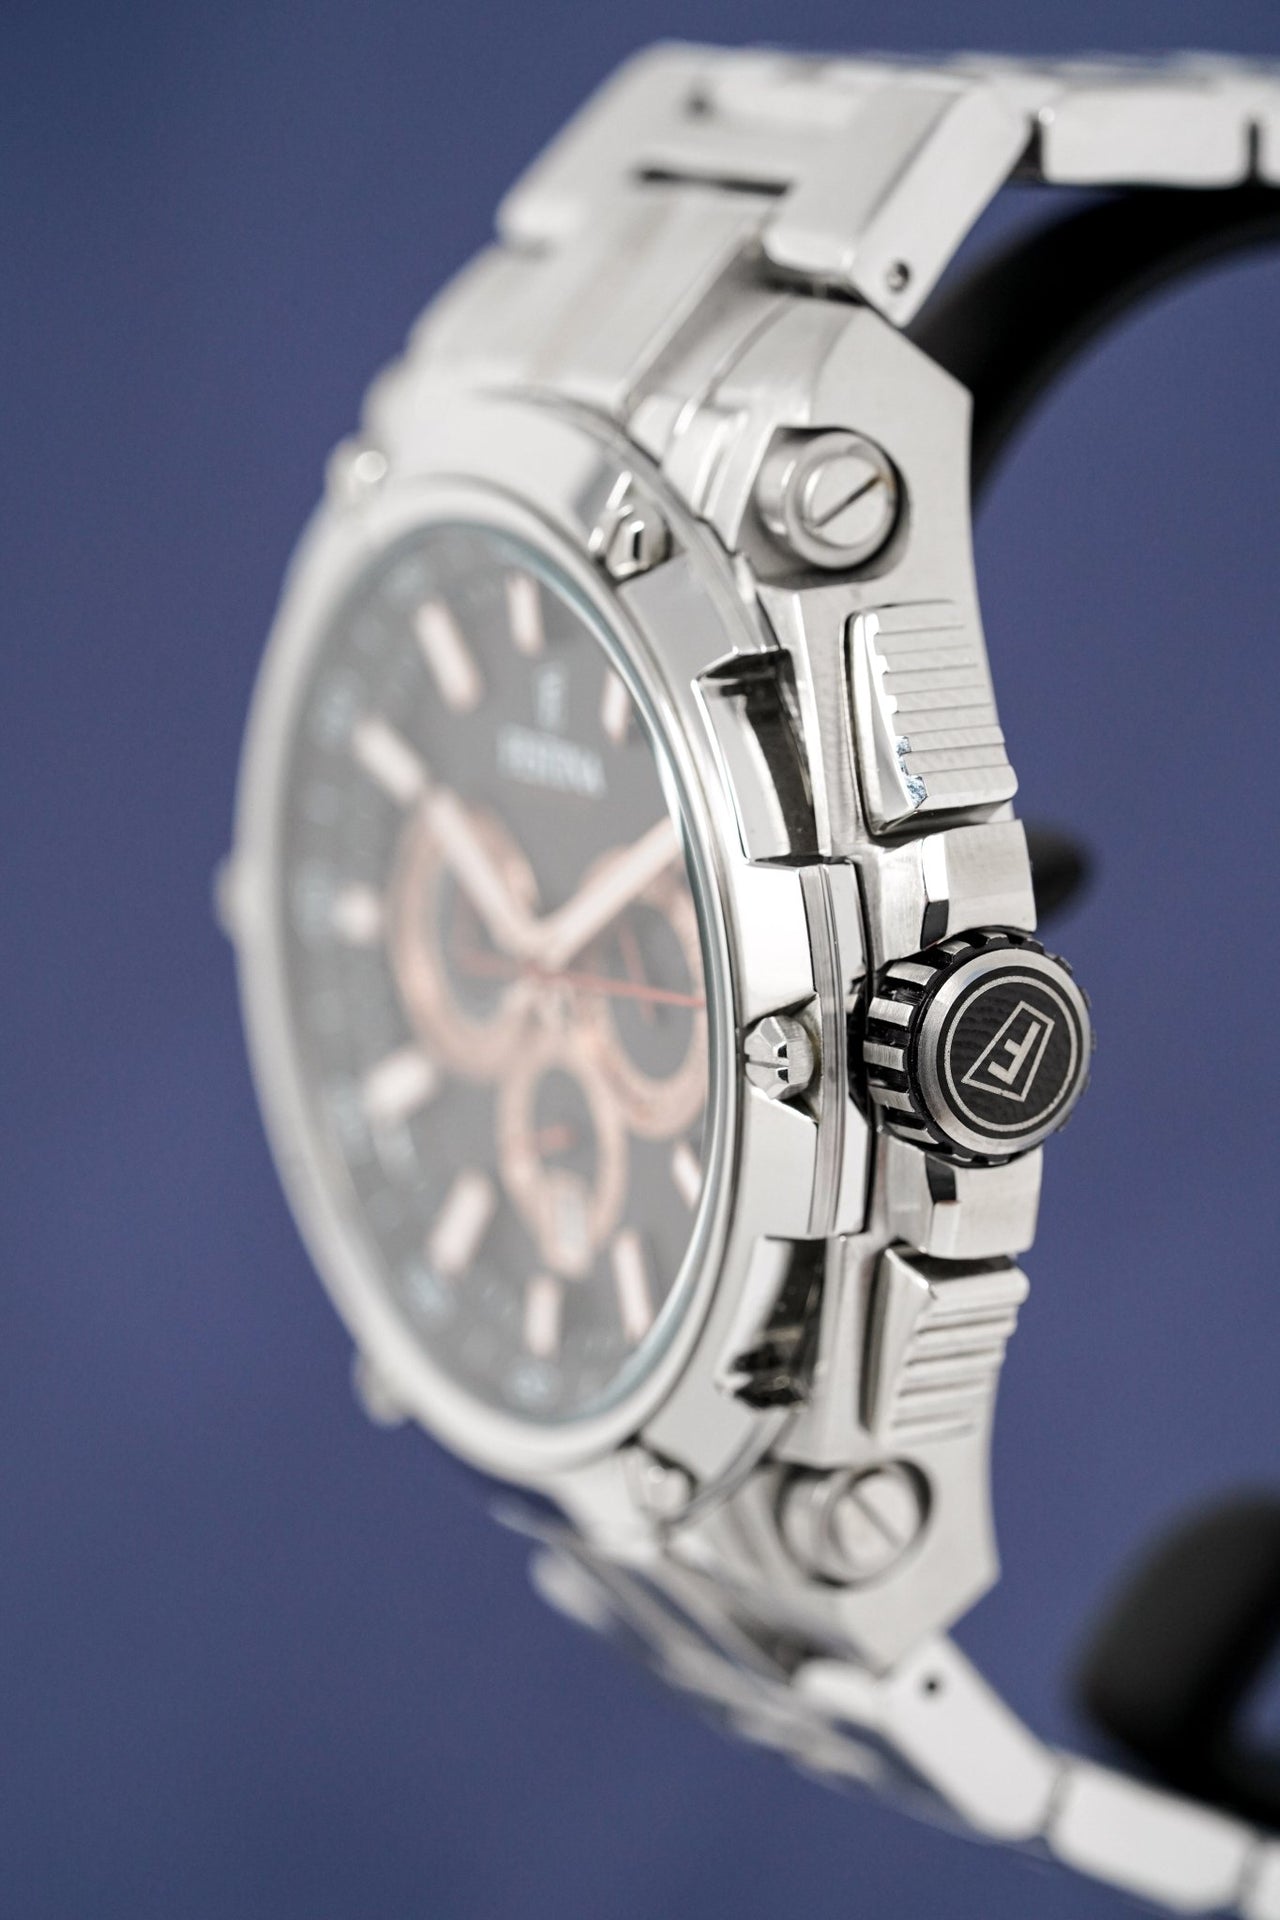 Festina Watch Black Chrono Bike Stainless Steel F20327-8 - Watches & Crystals